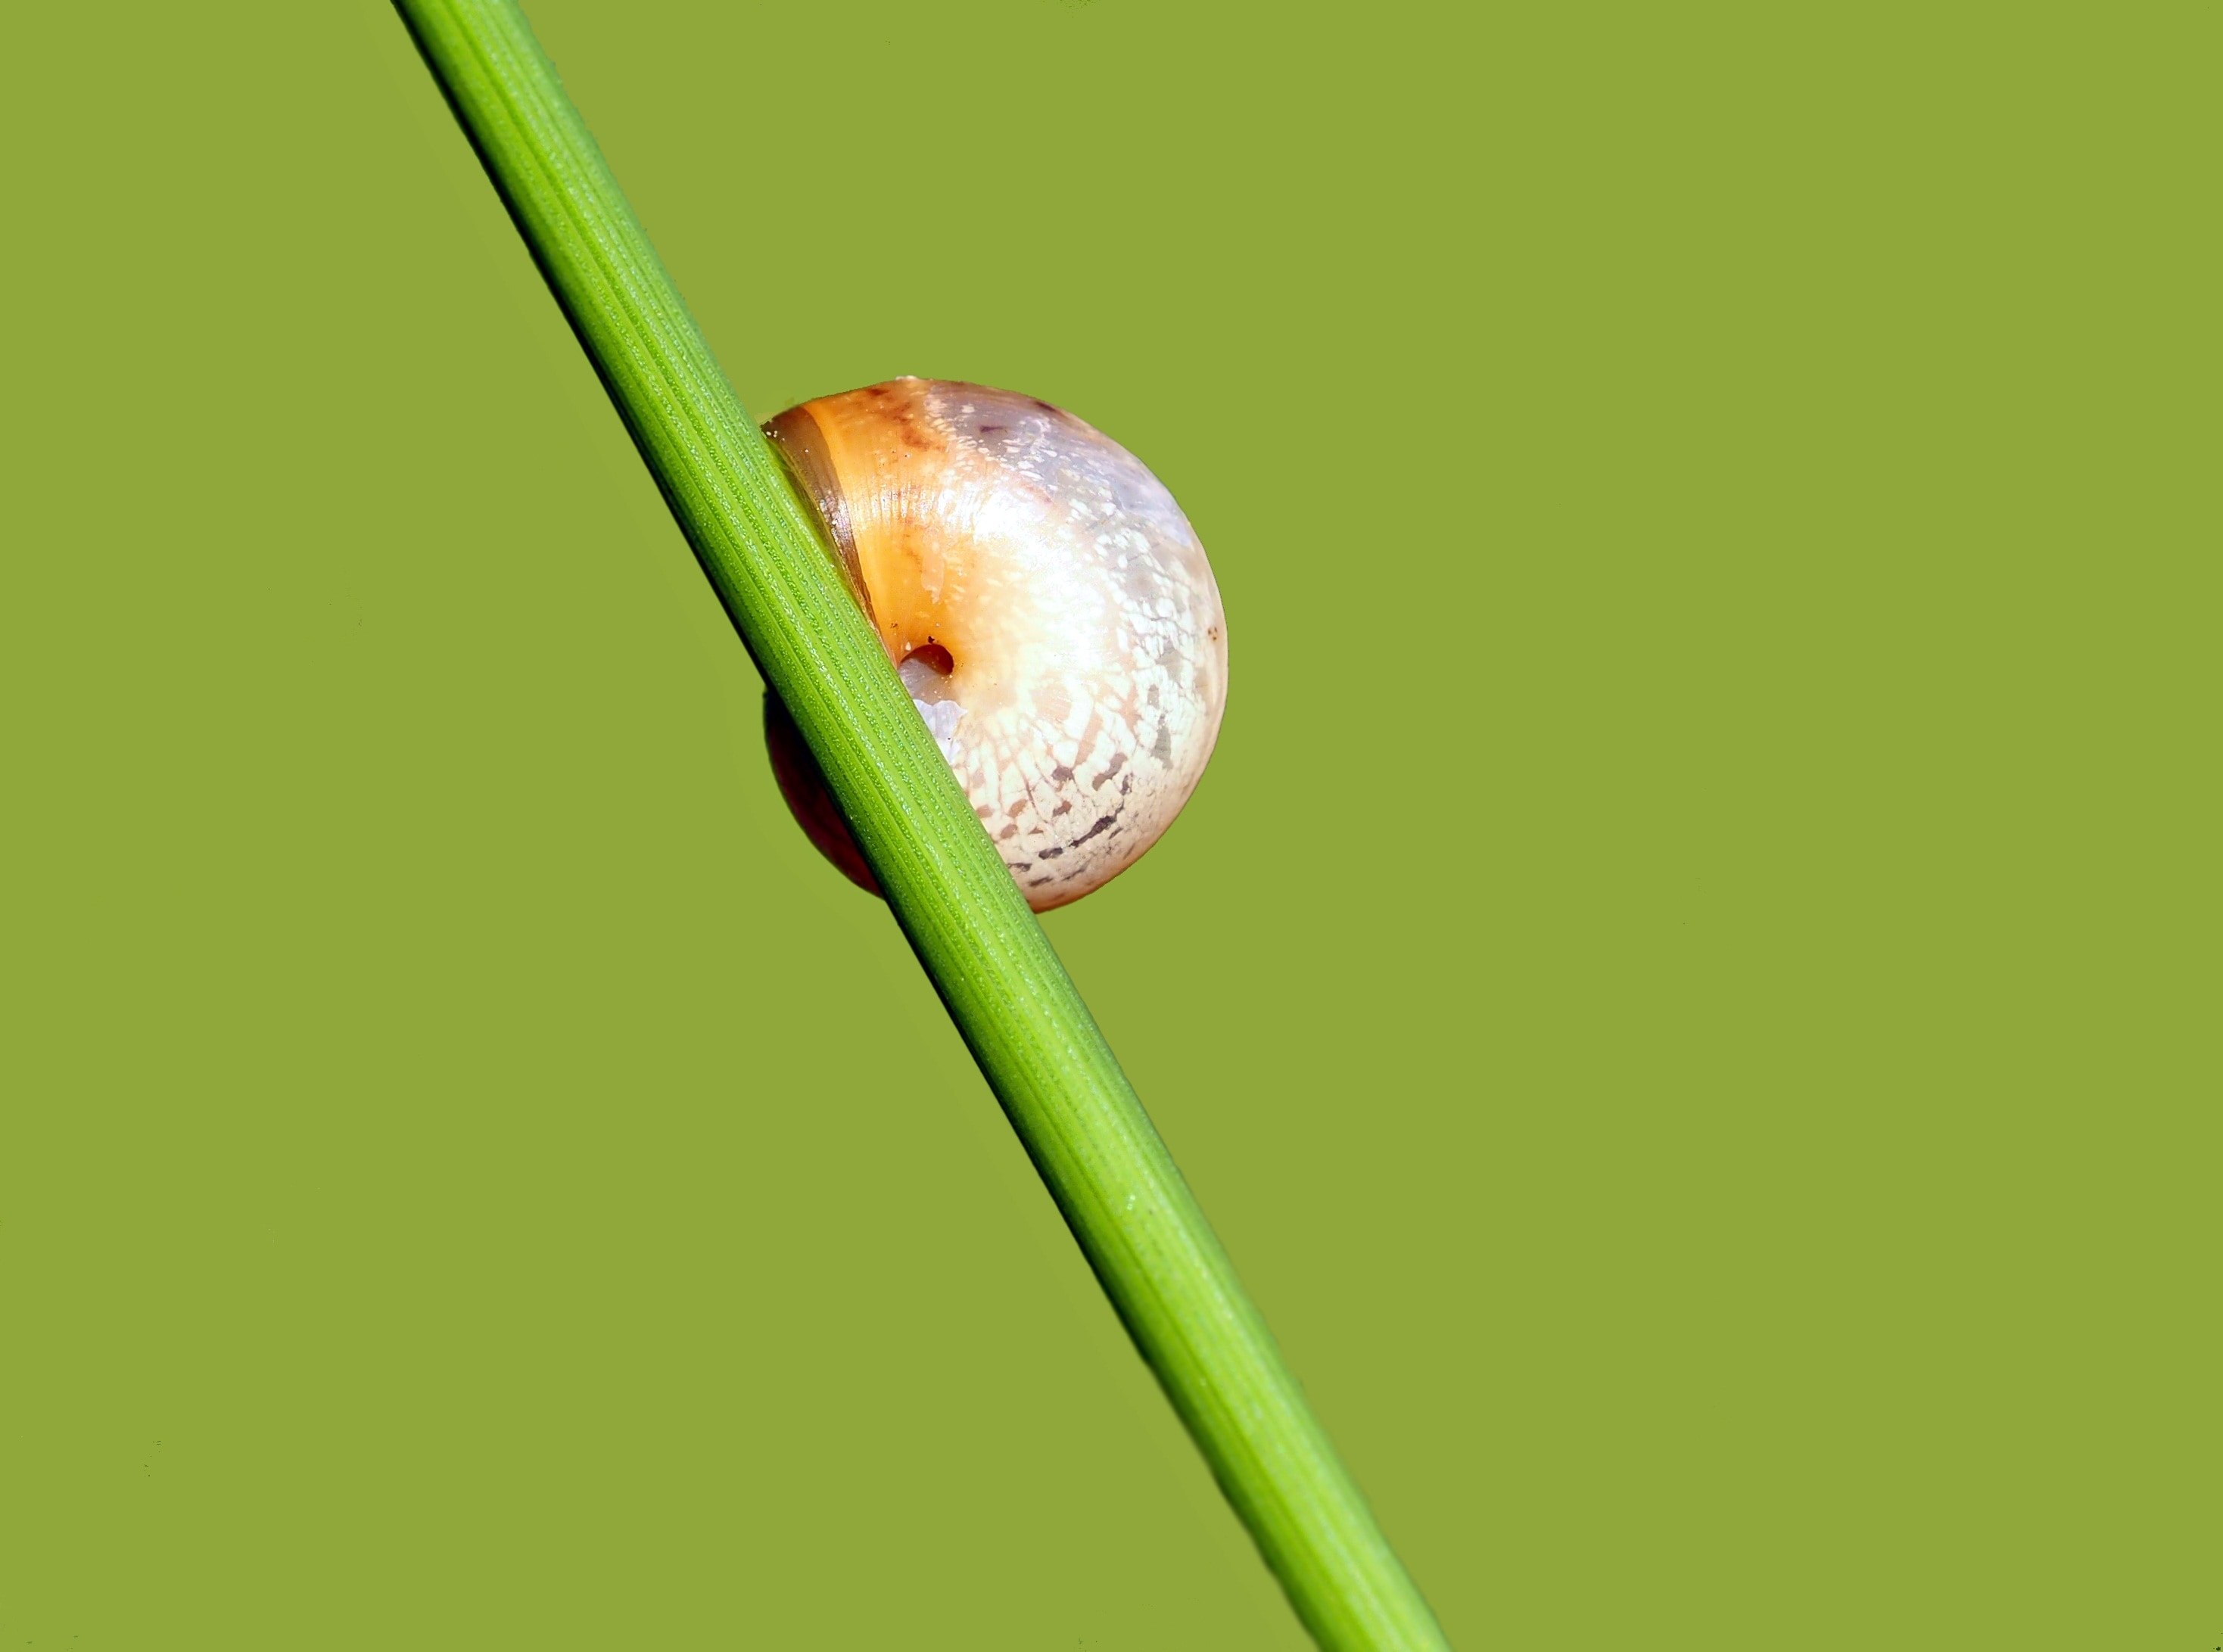 snail on green stick